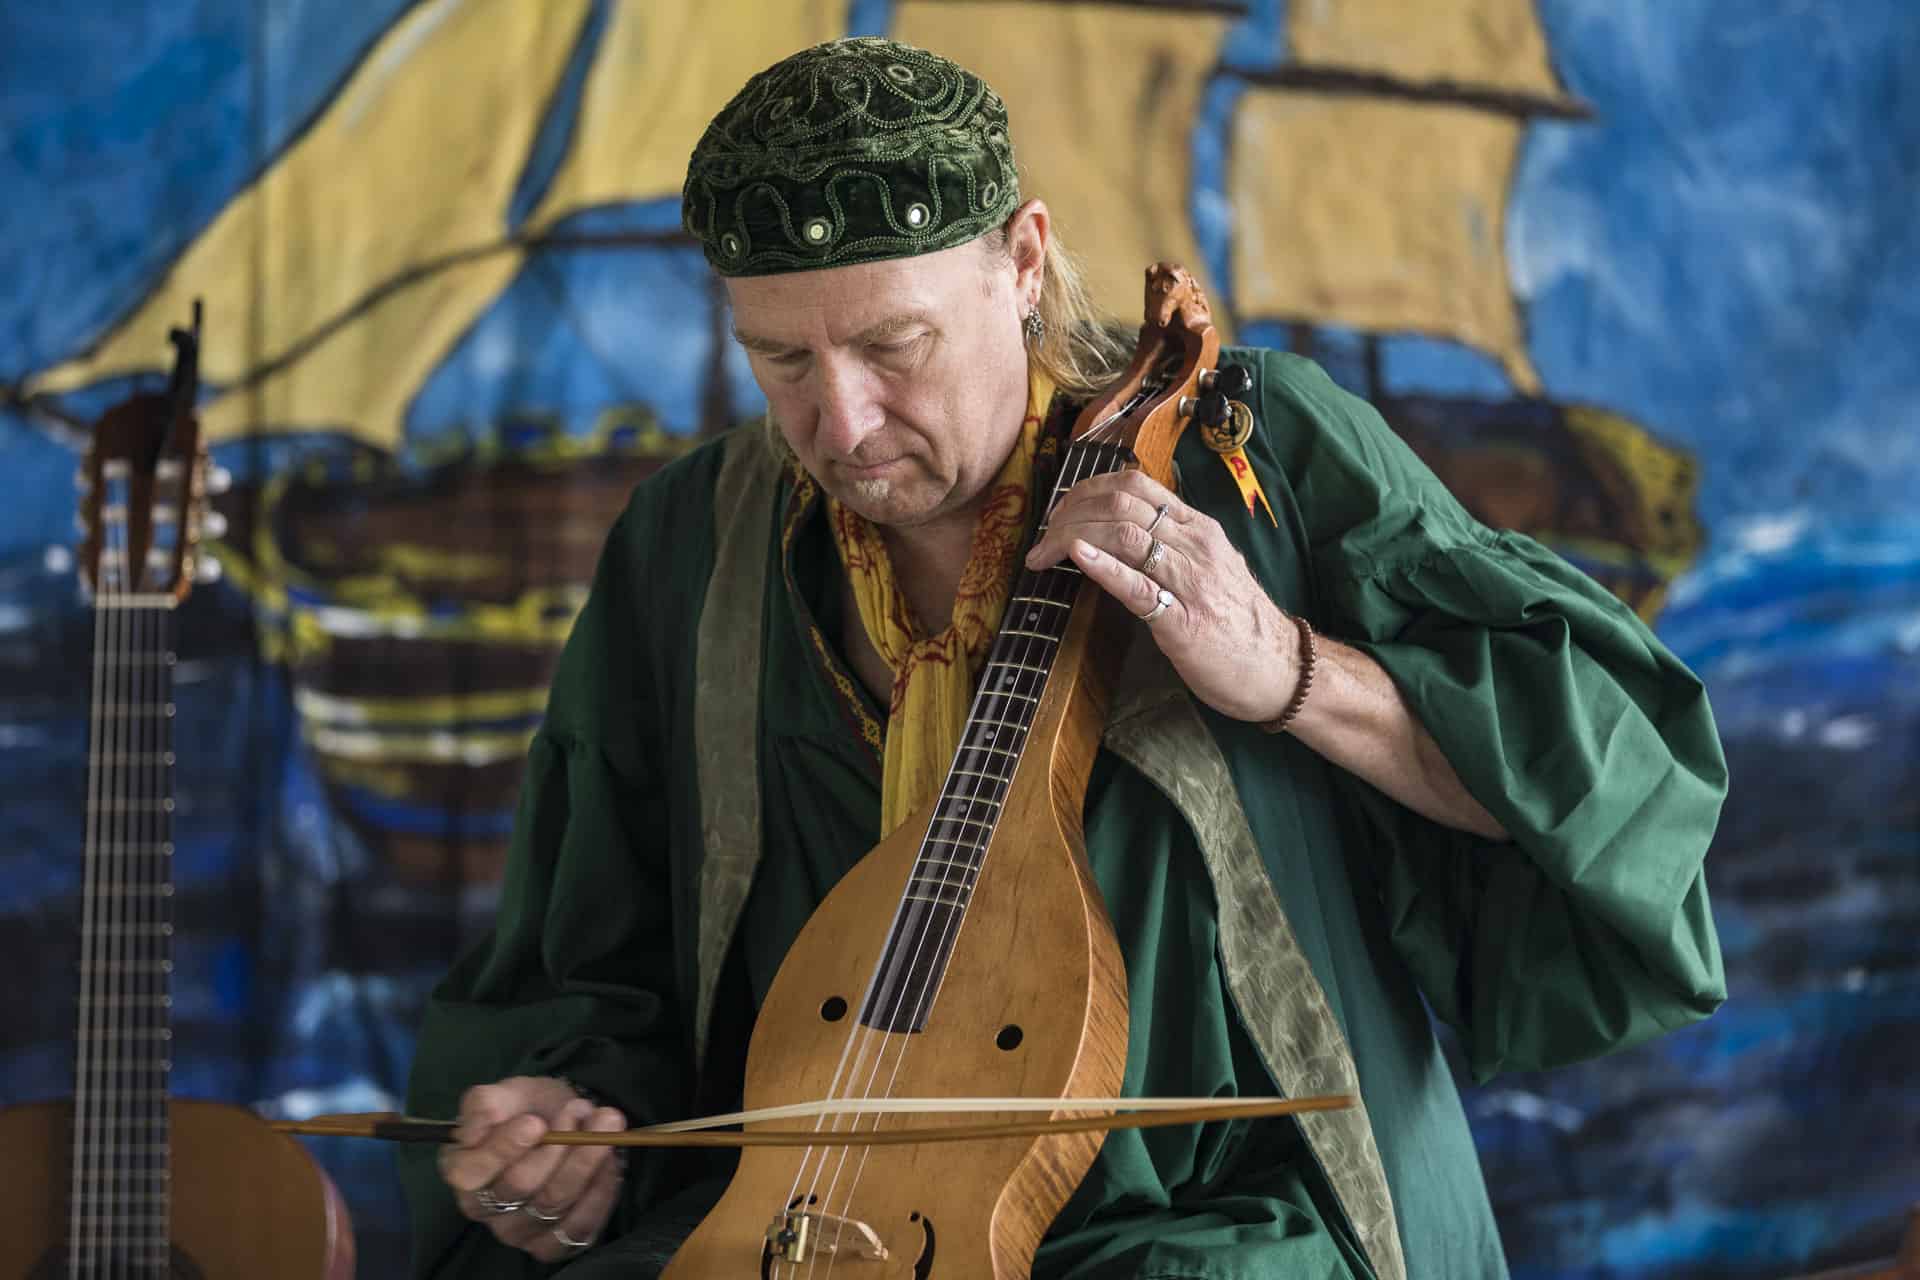 man playing stringed instrument